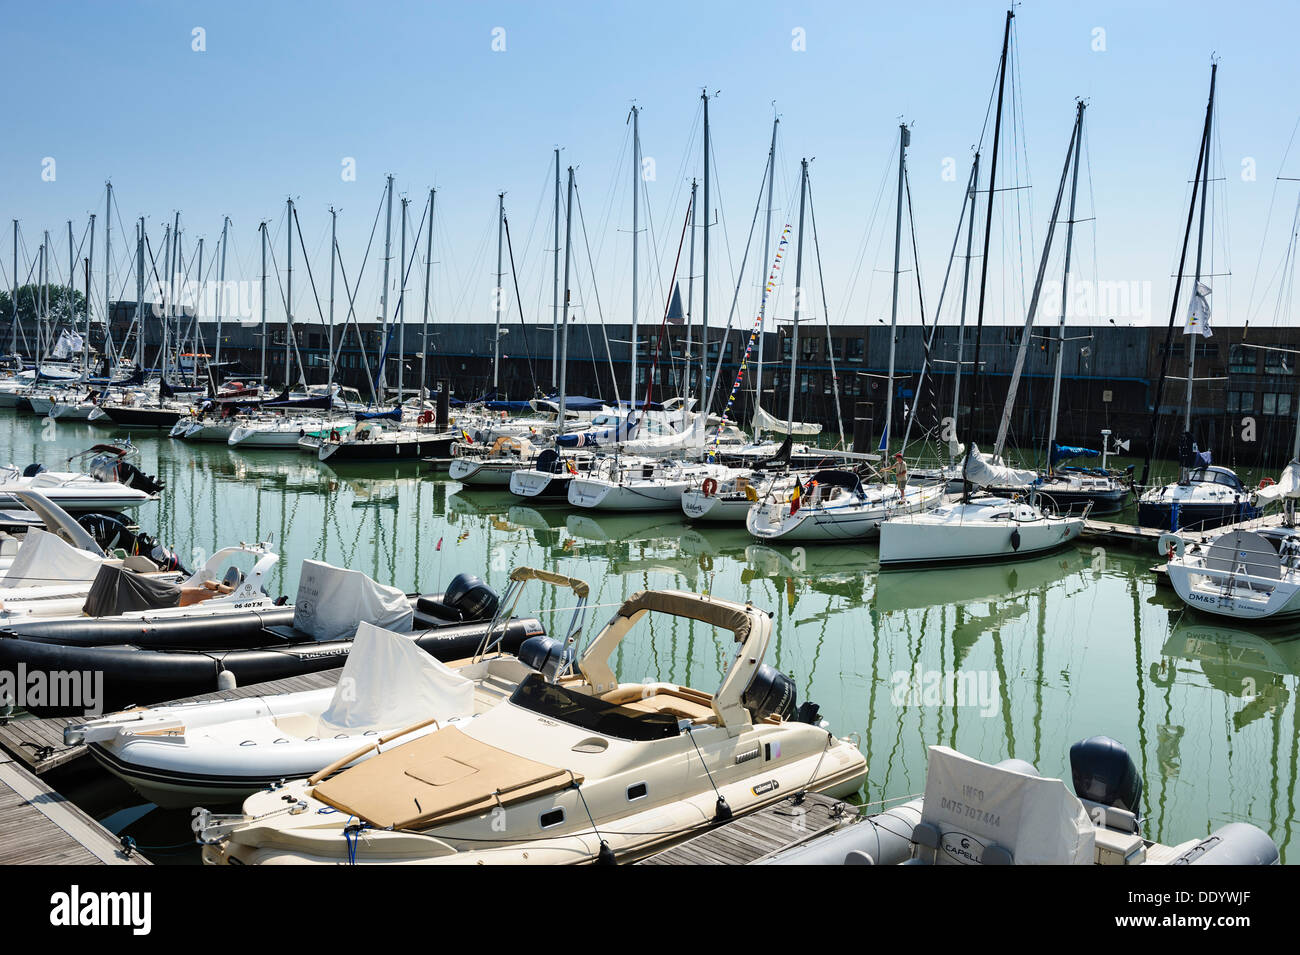 The marina at Zeebrugge, Belgium Stock Photo